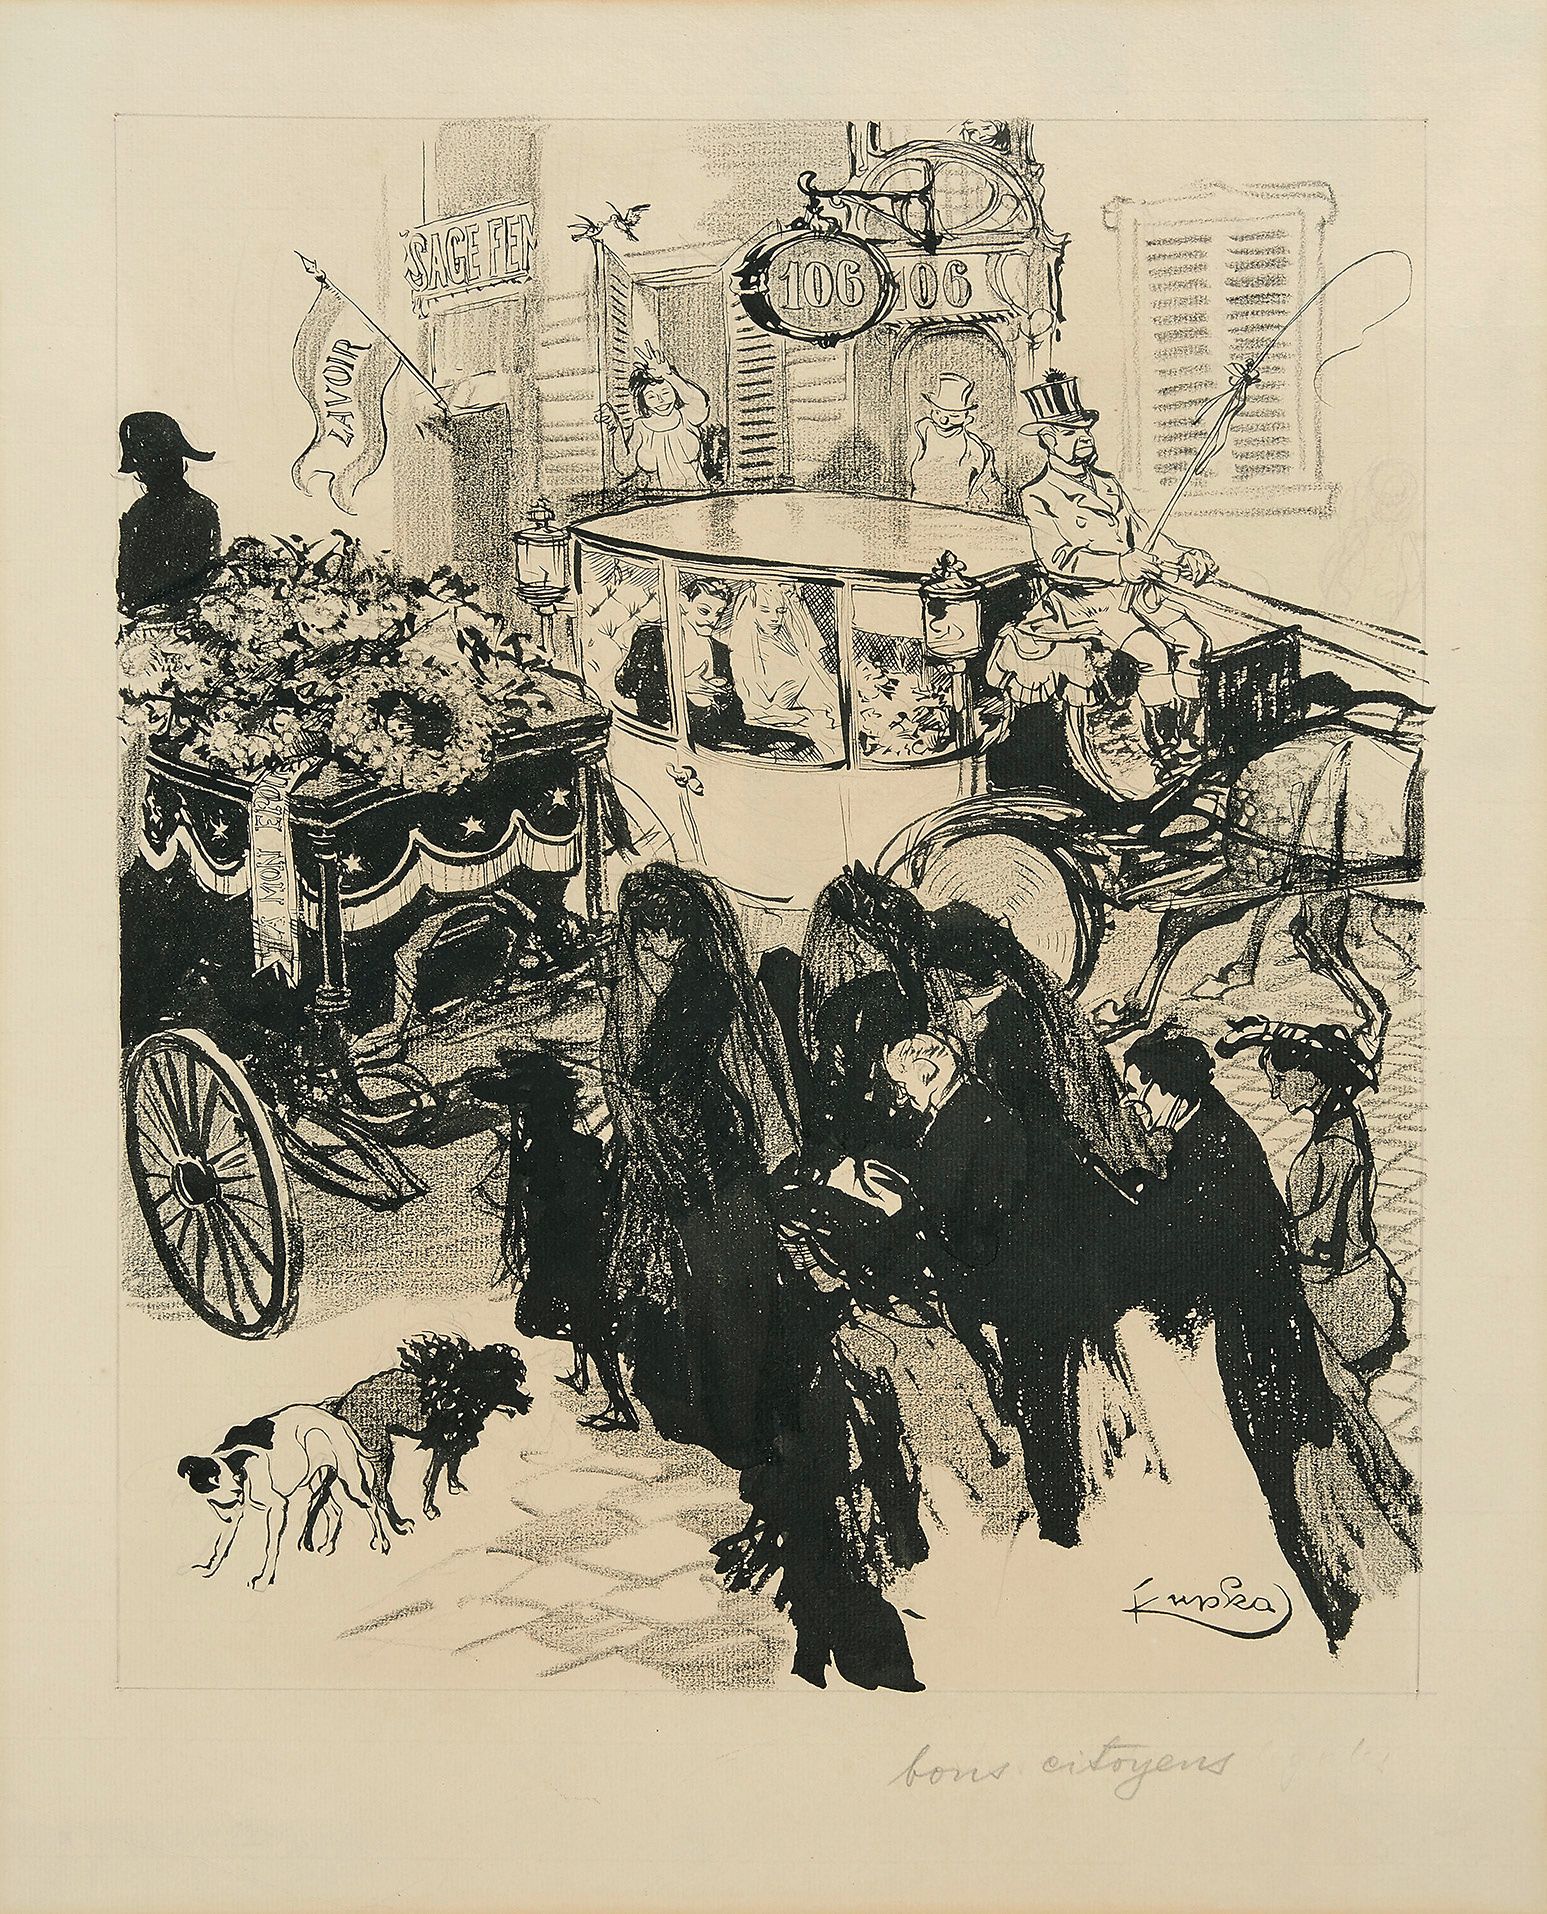 František KUPKA (Opo?no, 1871 - Puteaux, 1957) "好公民"：葬礼队伍与婚礼队伍相交
炭笔、印度墨水和灰色水洗。
右&hellip;